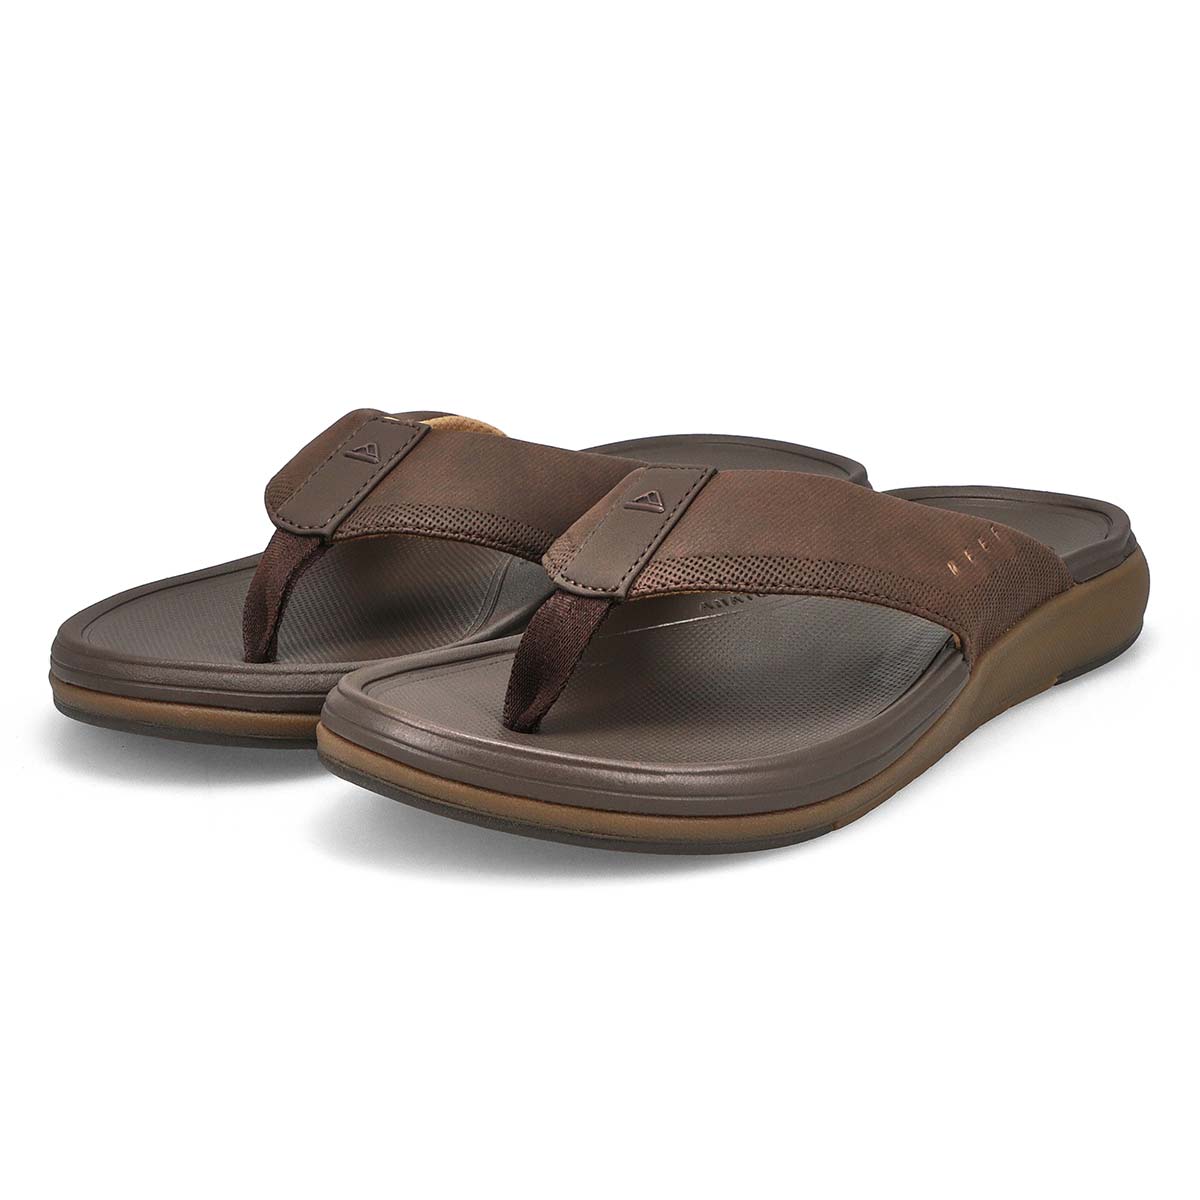 Men's Cushion Norte Sandal - Dark Brown